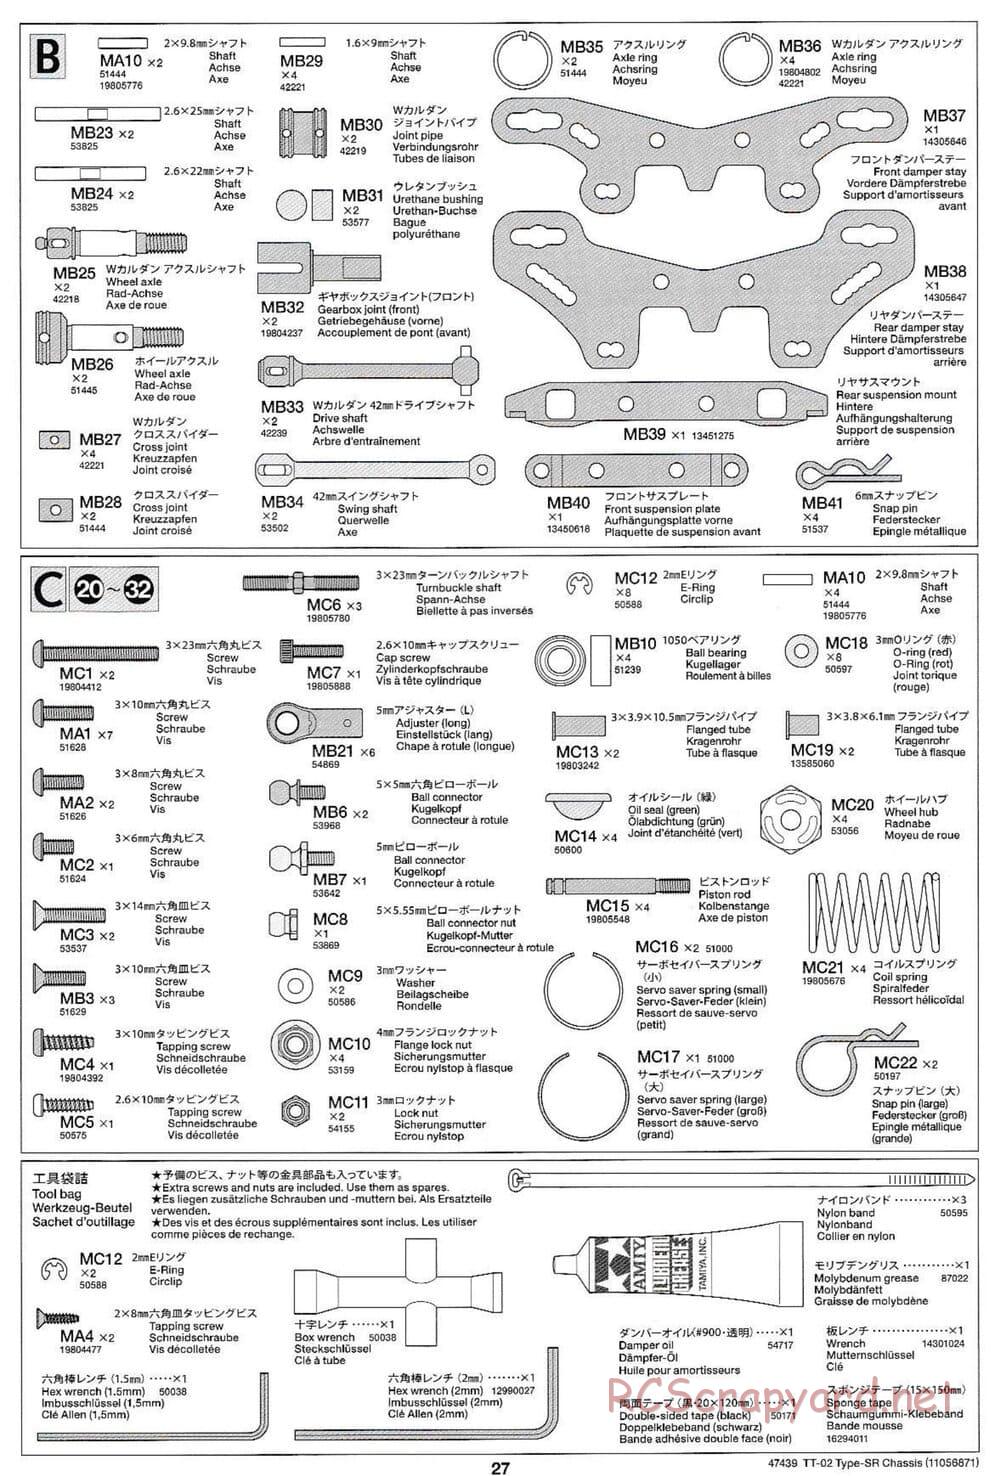 Tamiya - TT-02 Type-SR Chassis - Manual - Page 27